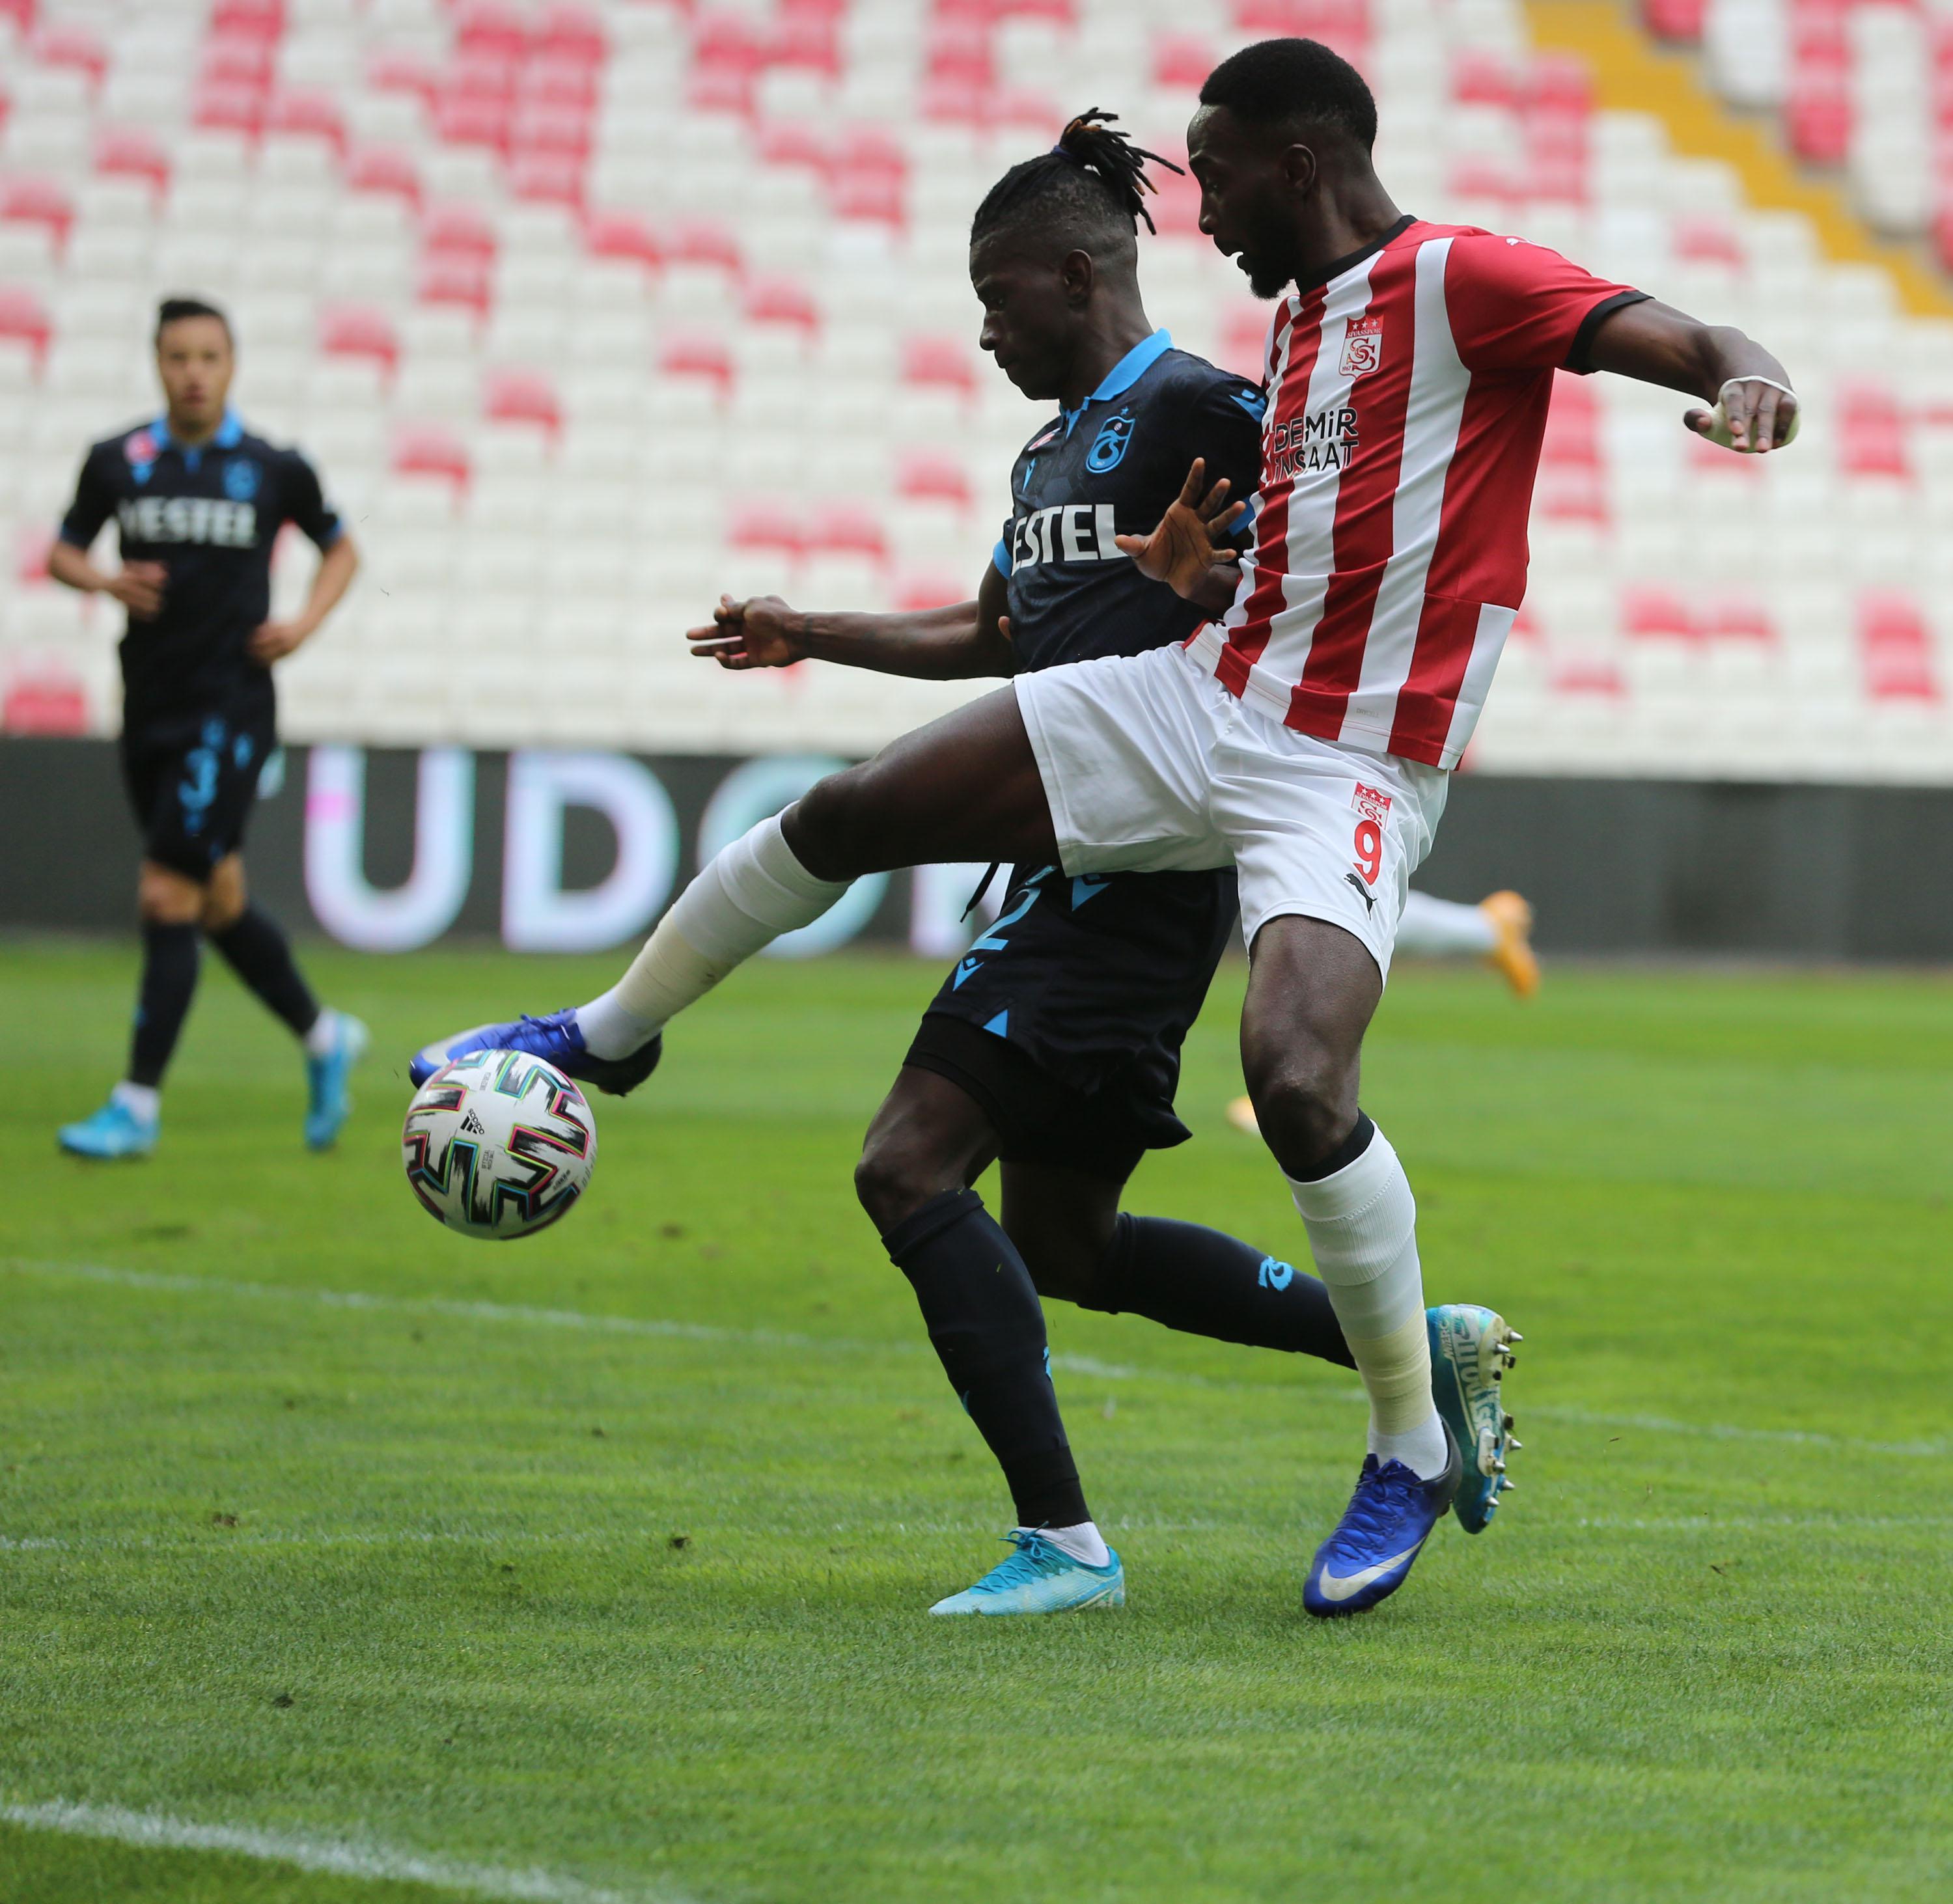 ÖZET | Sivasspor - Trabzonspor maç sonucu: 0-0